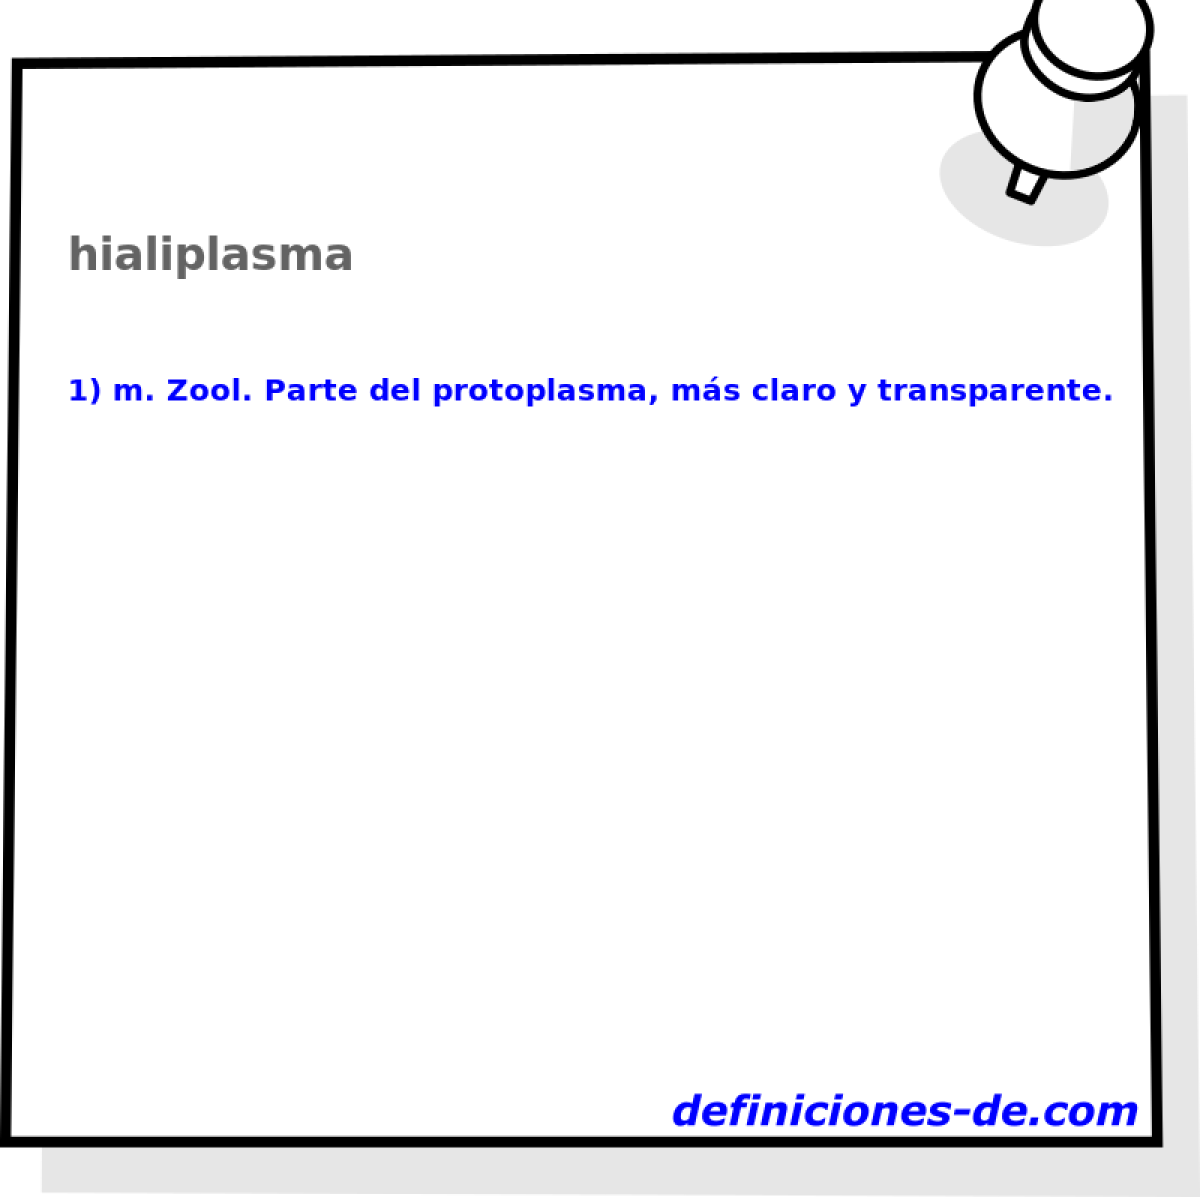 hialiplasma 